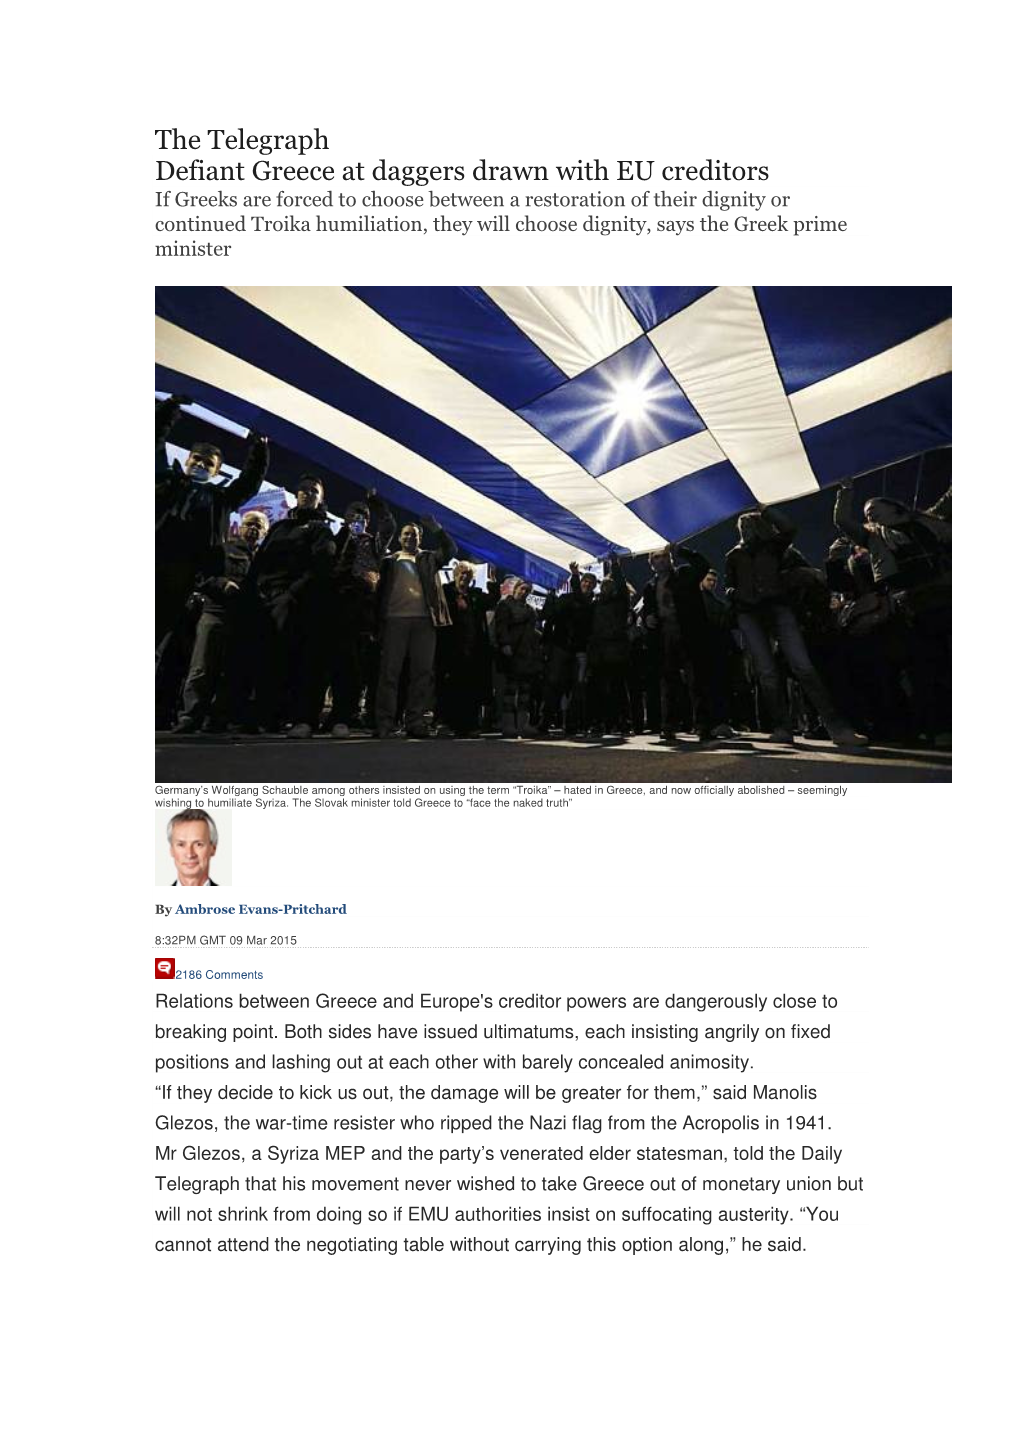 The Telegraph Defiant Greece at Daggers Drawn with EU Creditors